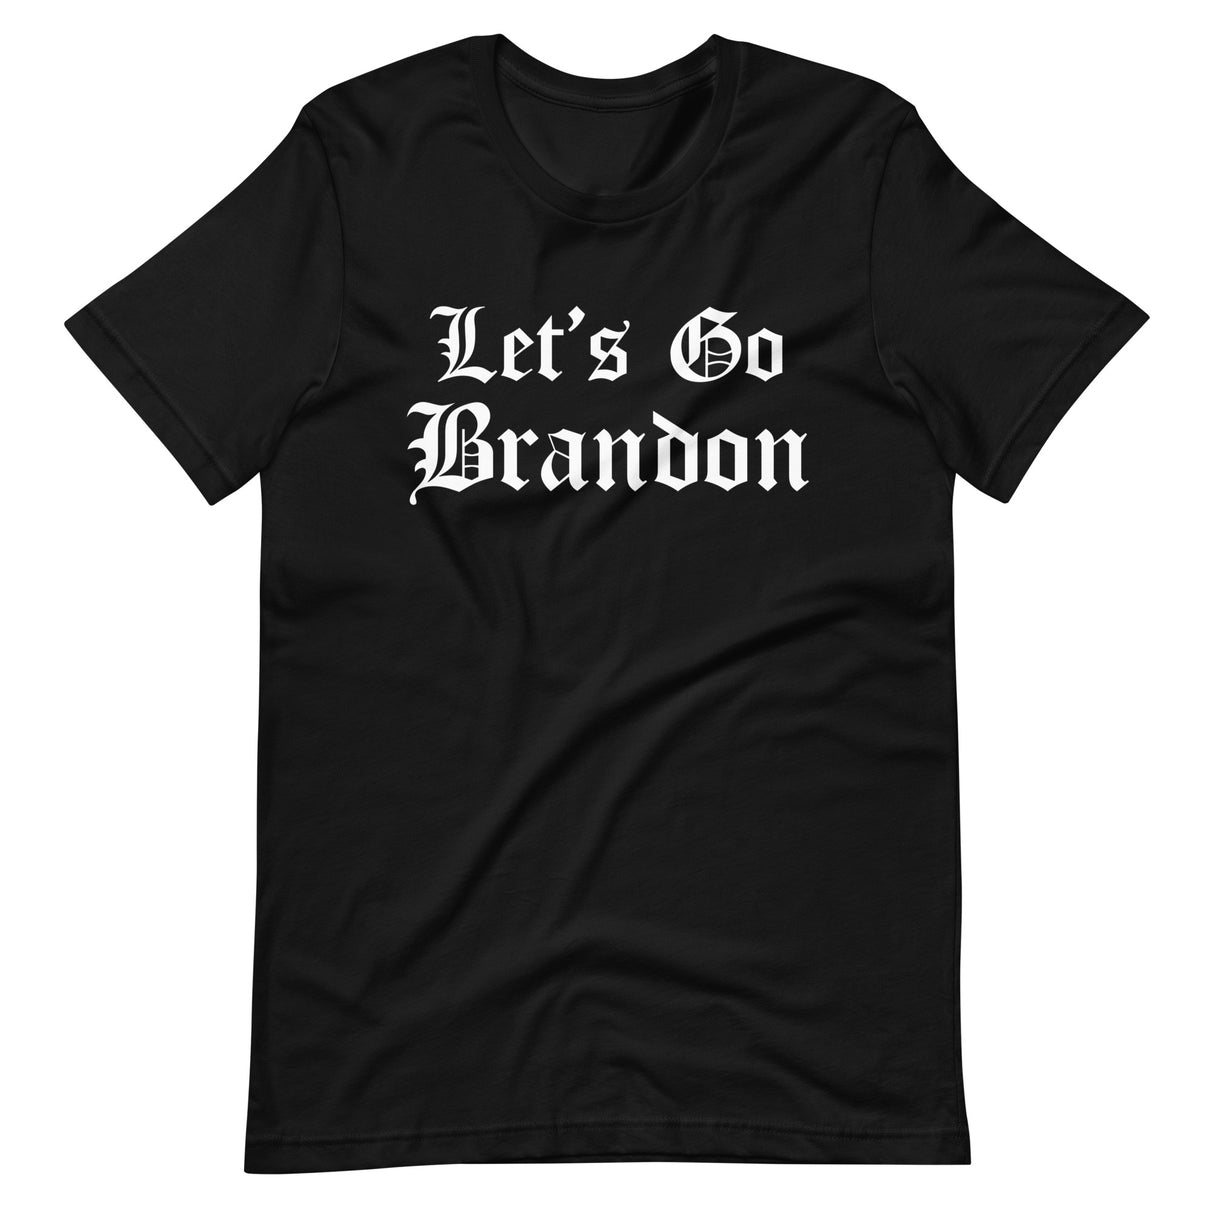 Let's Go Brandon Old London Shirt - Libertarian Country